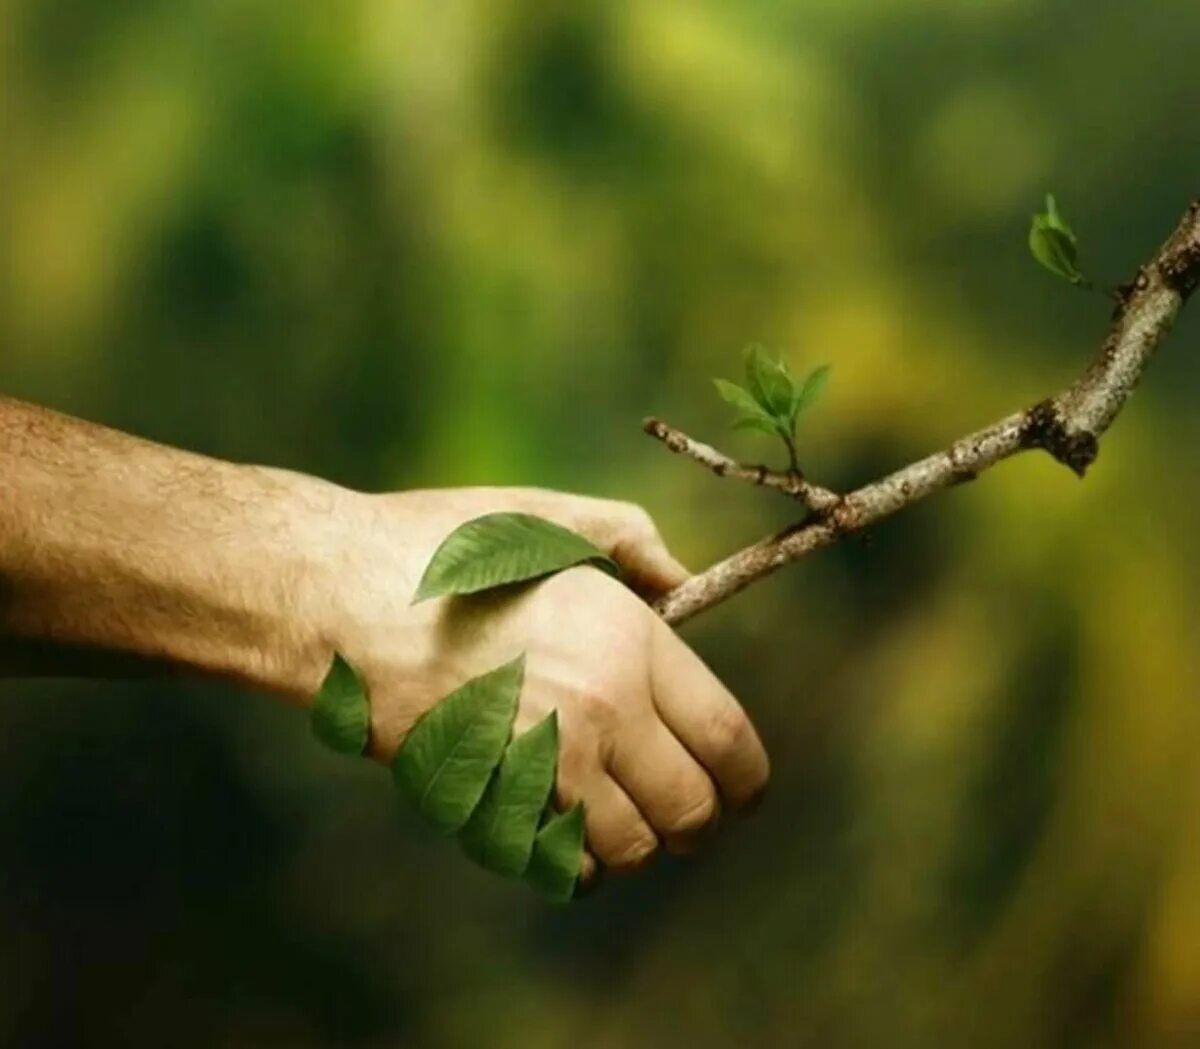 Нужно любить природу. Дерево в руках. Забота о природе. Забота человека о природе. Дерево в ладонях.